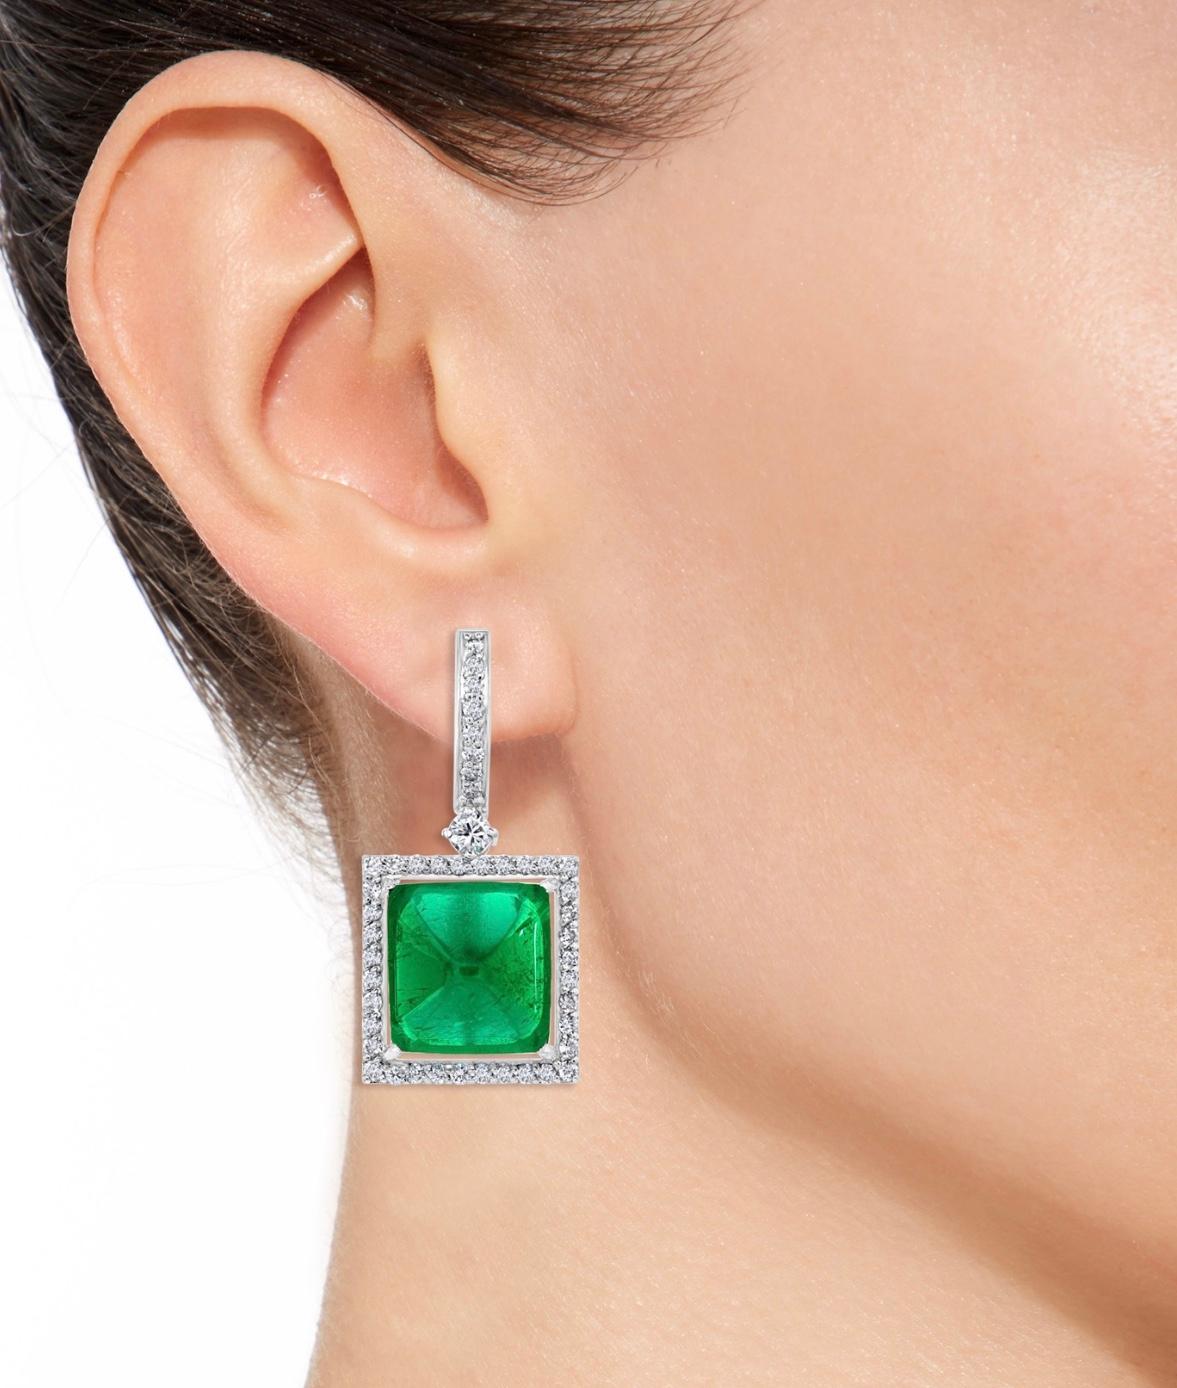 32Carat Natural Zambian Emerald Sugar Loaf Cabochon & Diamond/Drop Earrings 18KG For Sale 5